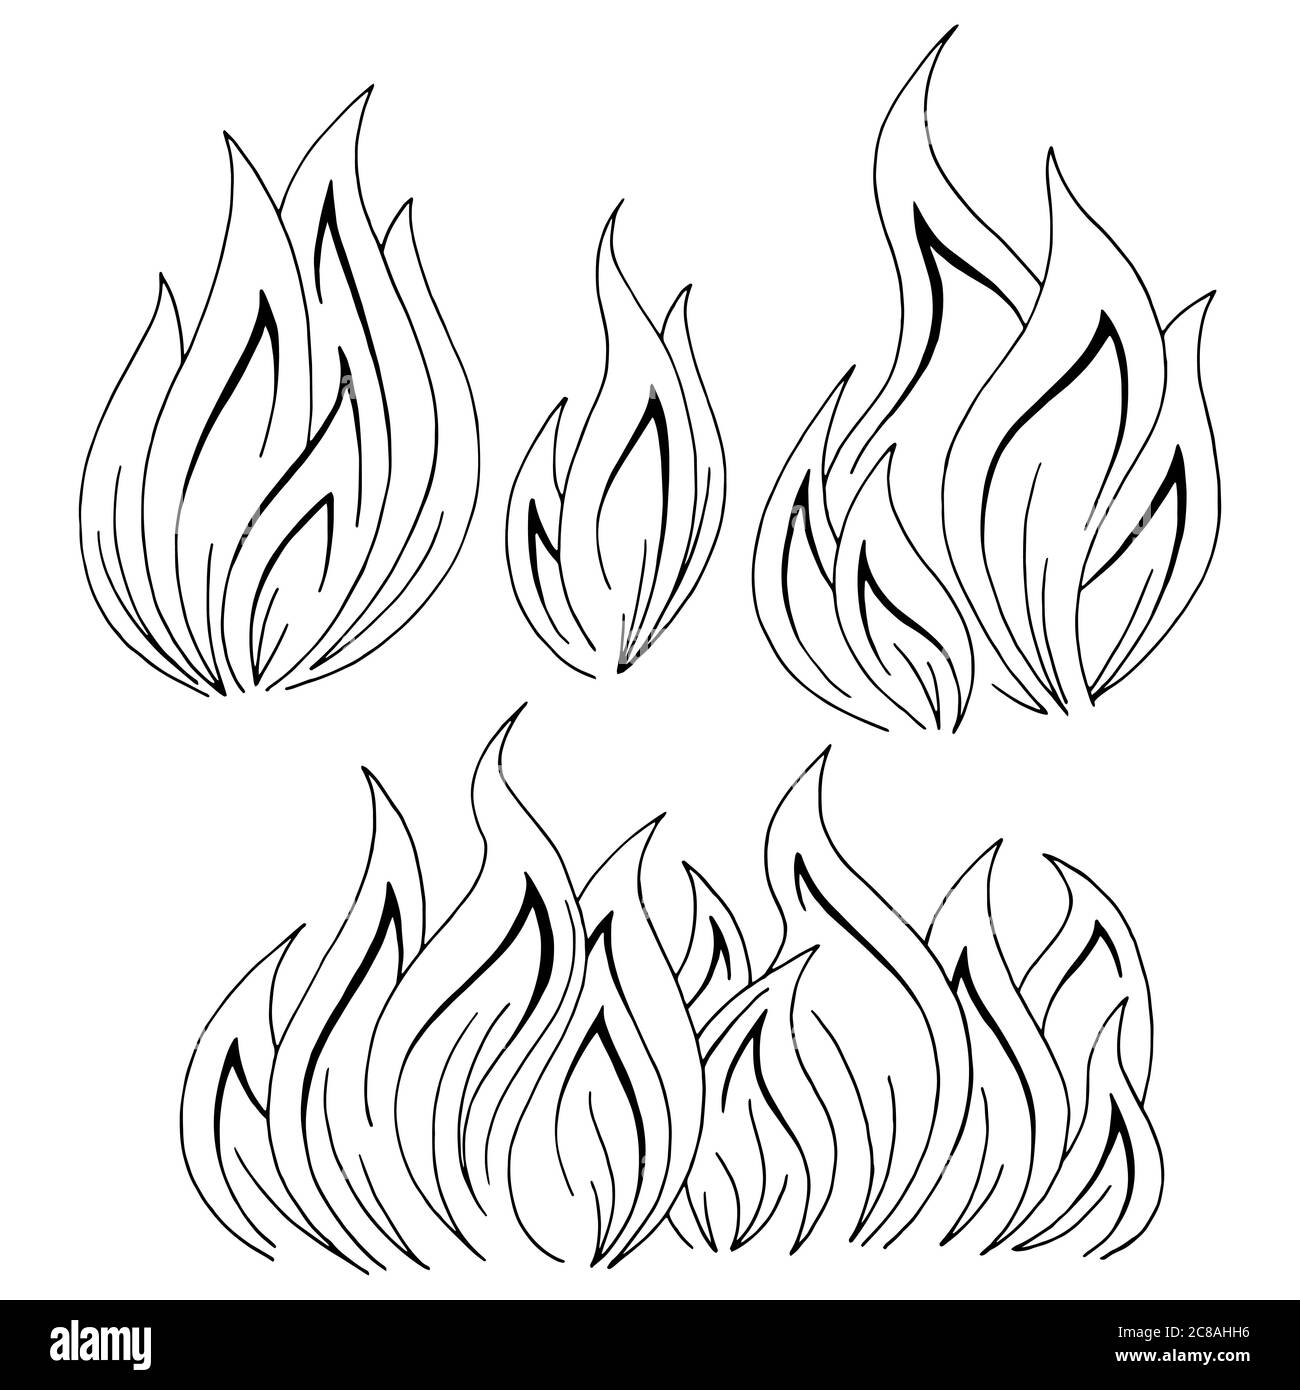 Feuerflamme Grafik schwarz weiß isoliert Skizze Illustration Vektor Stock Vektor